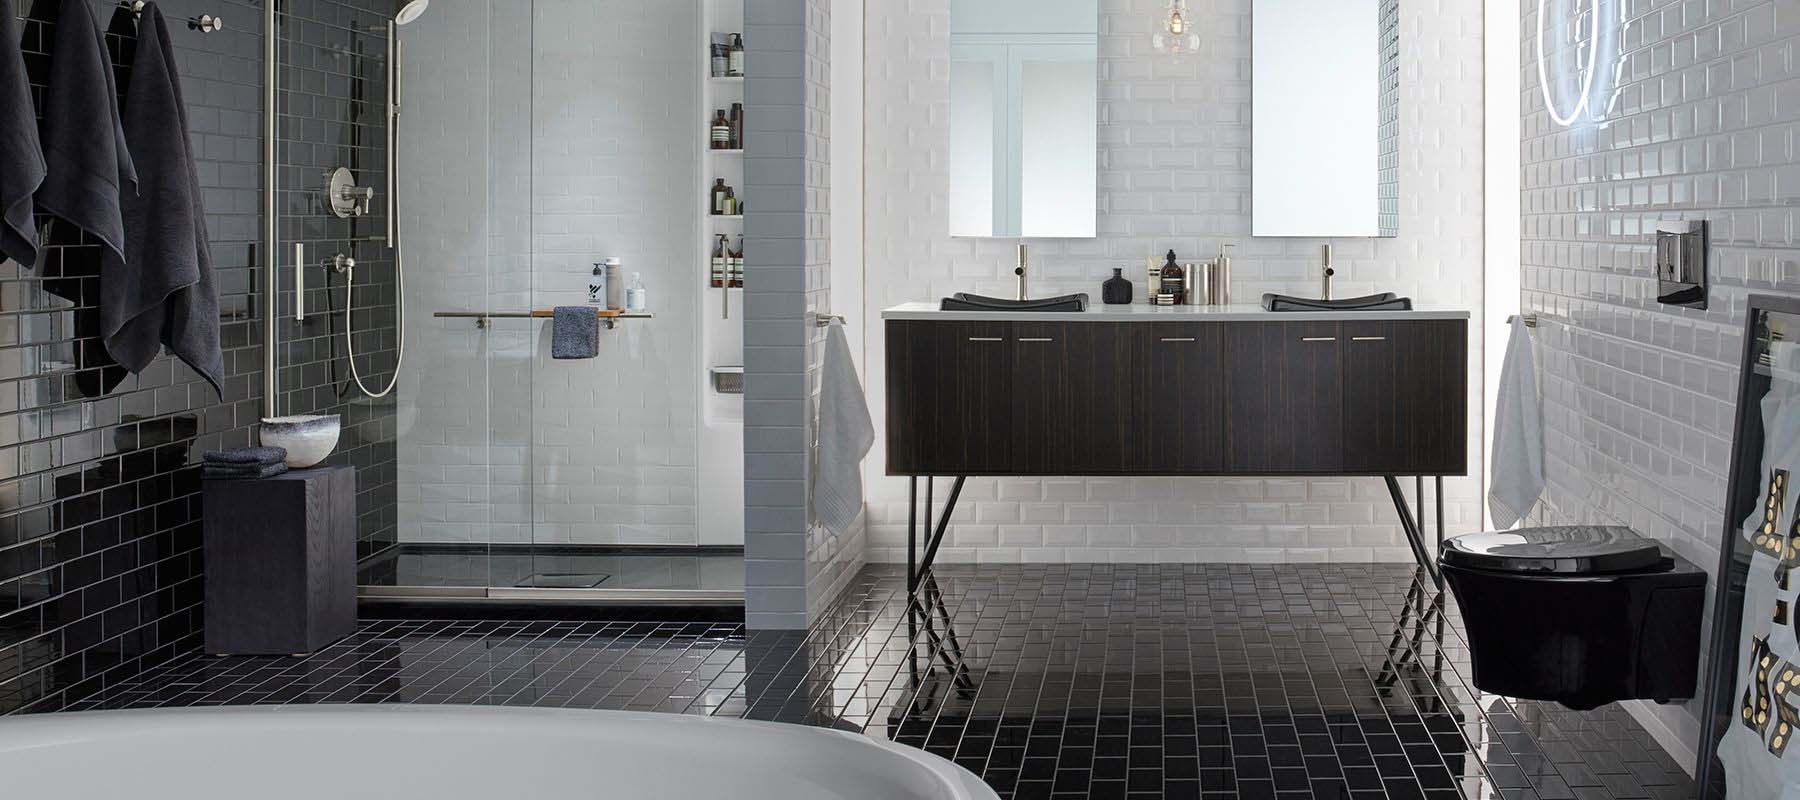 modern master bathroom design ideas black and white color scheme